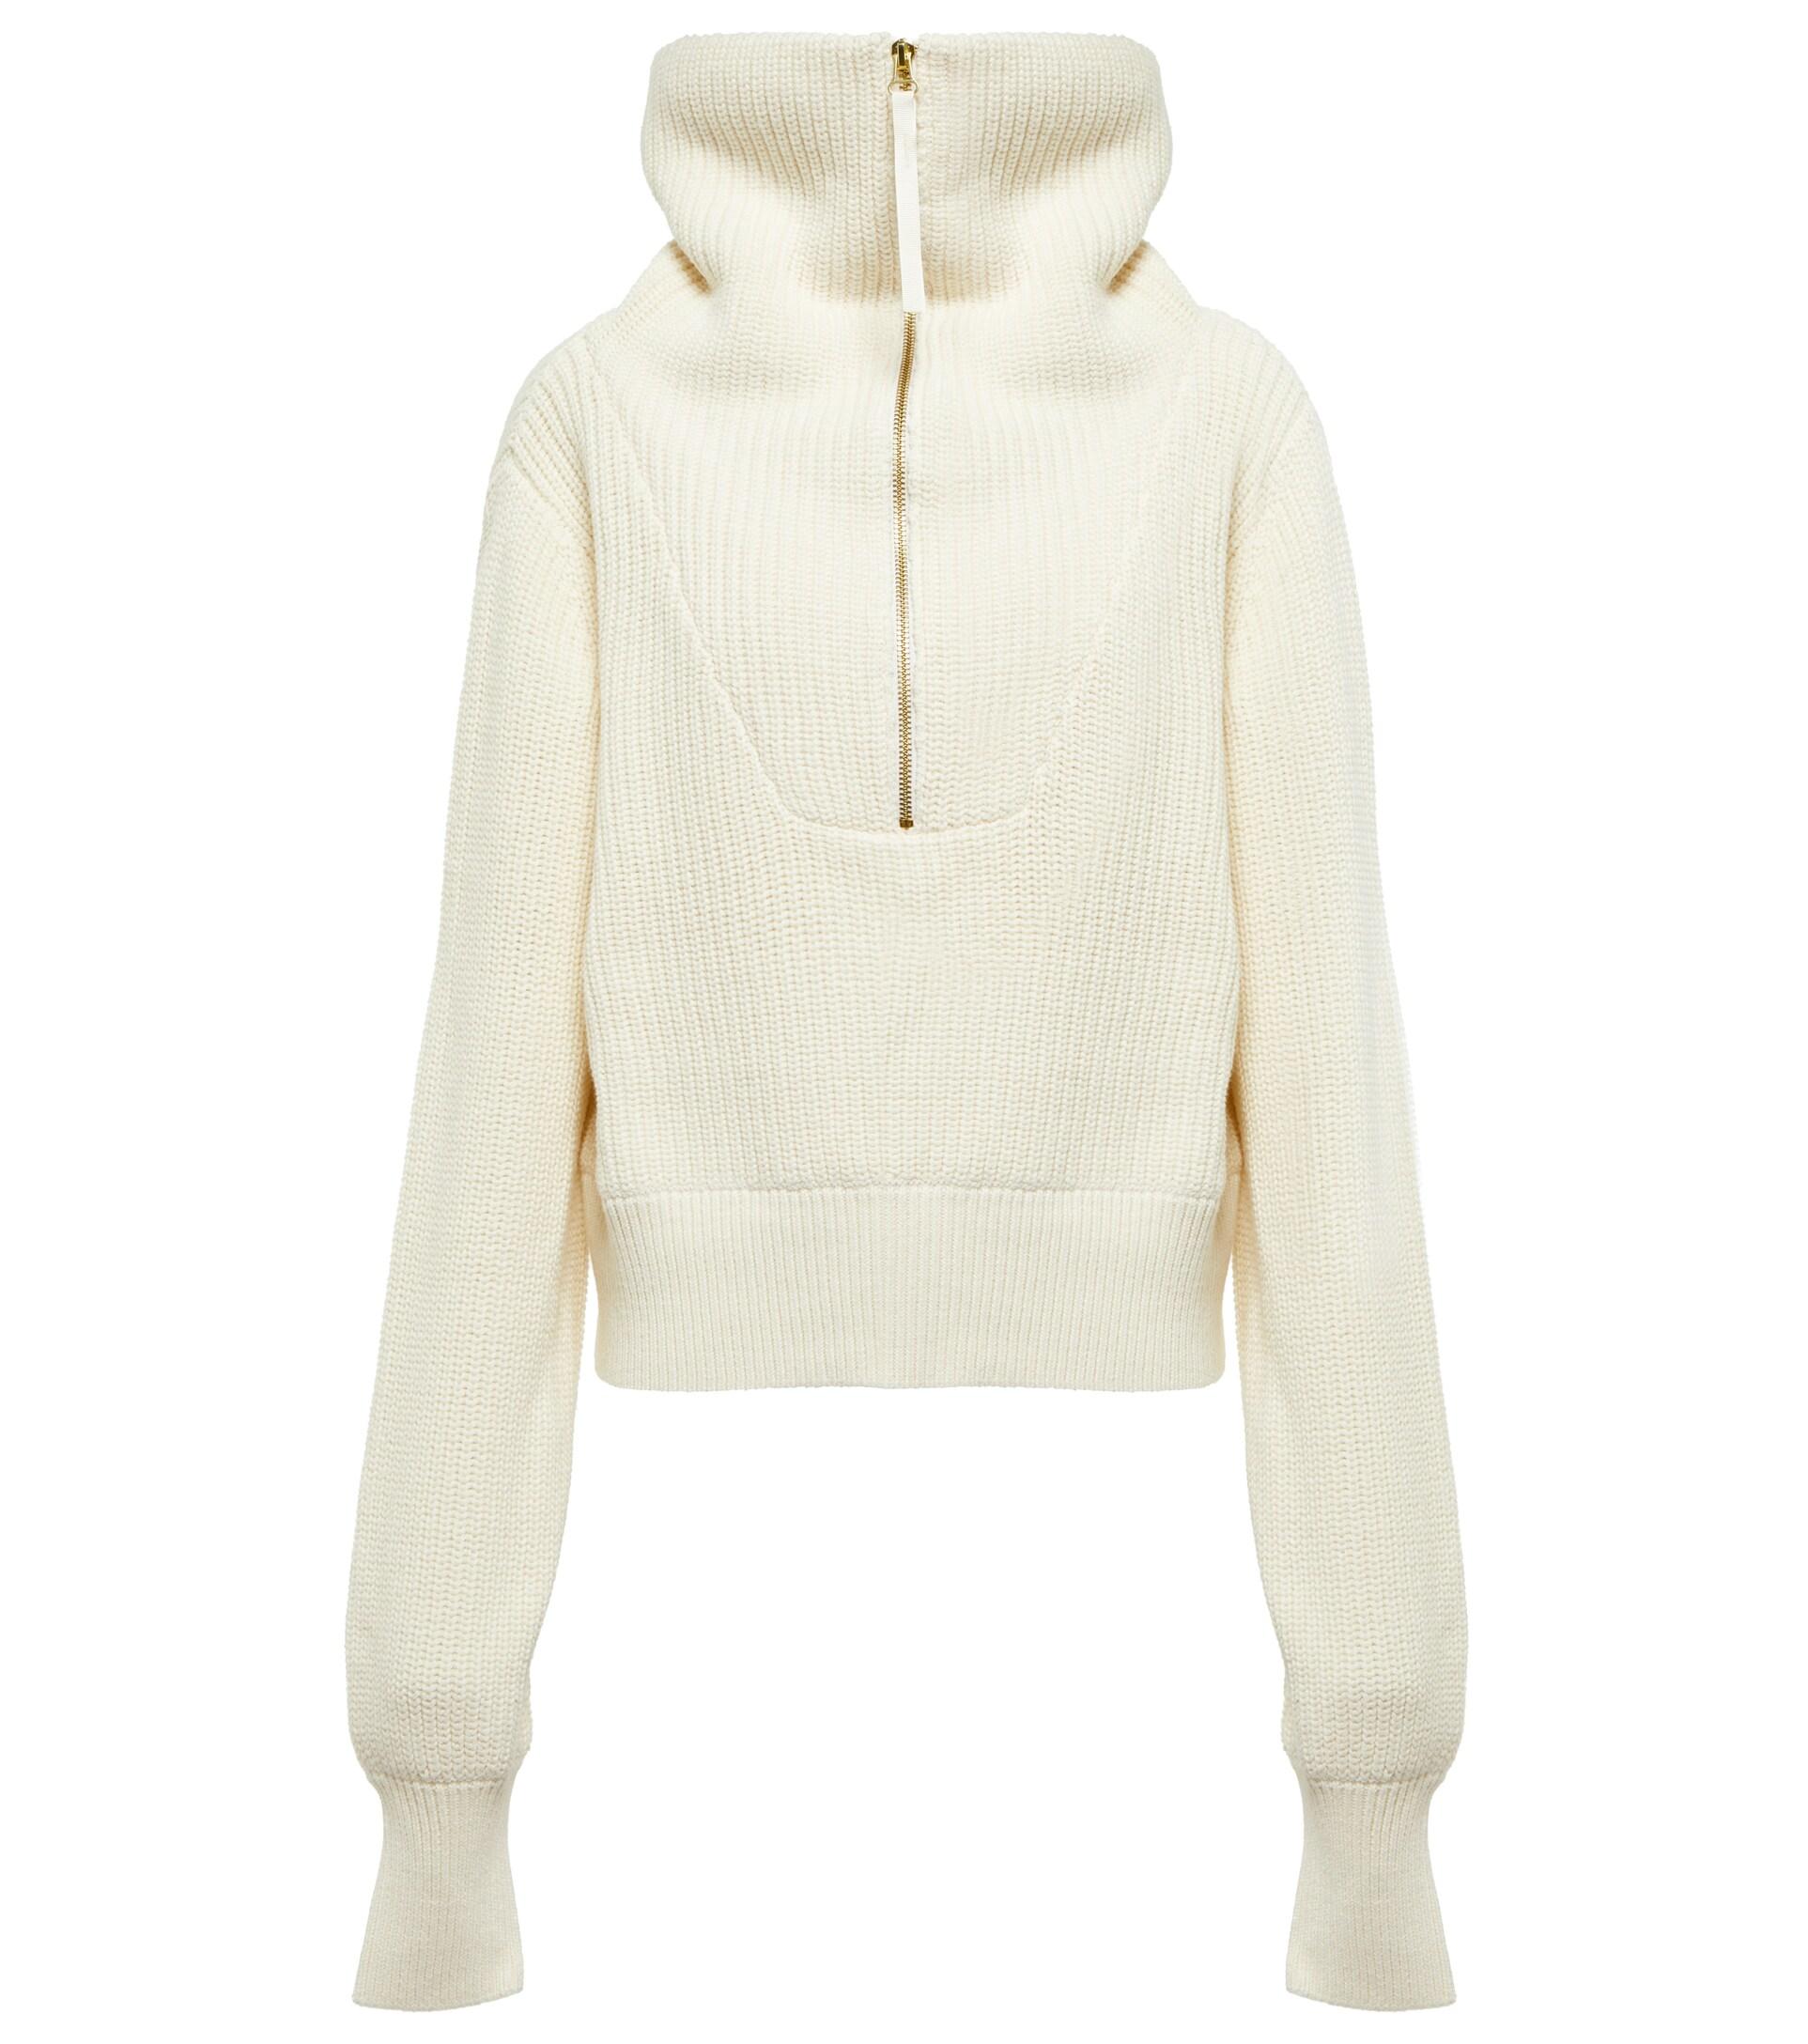 Varley Mentone Half-zip Sweater in White | Lyst